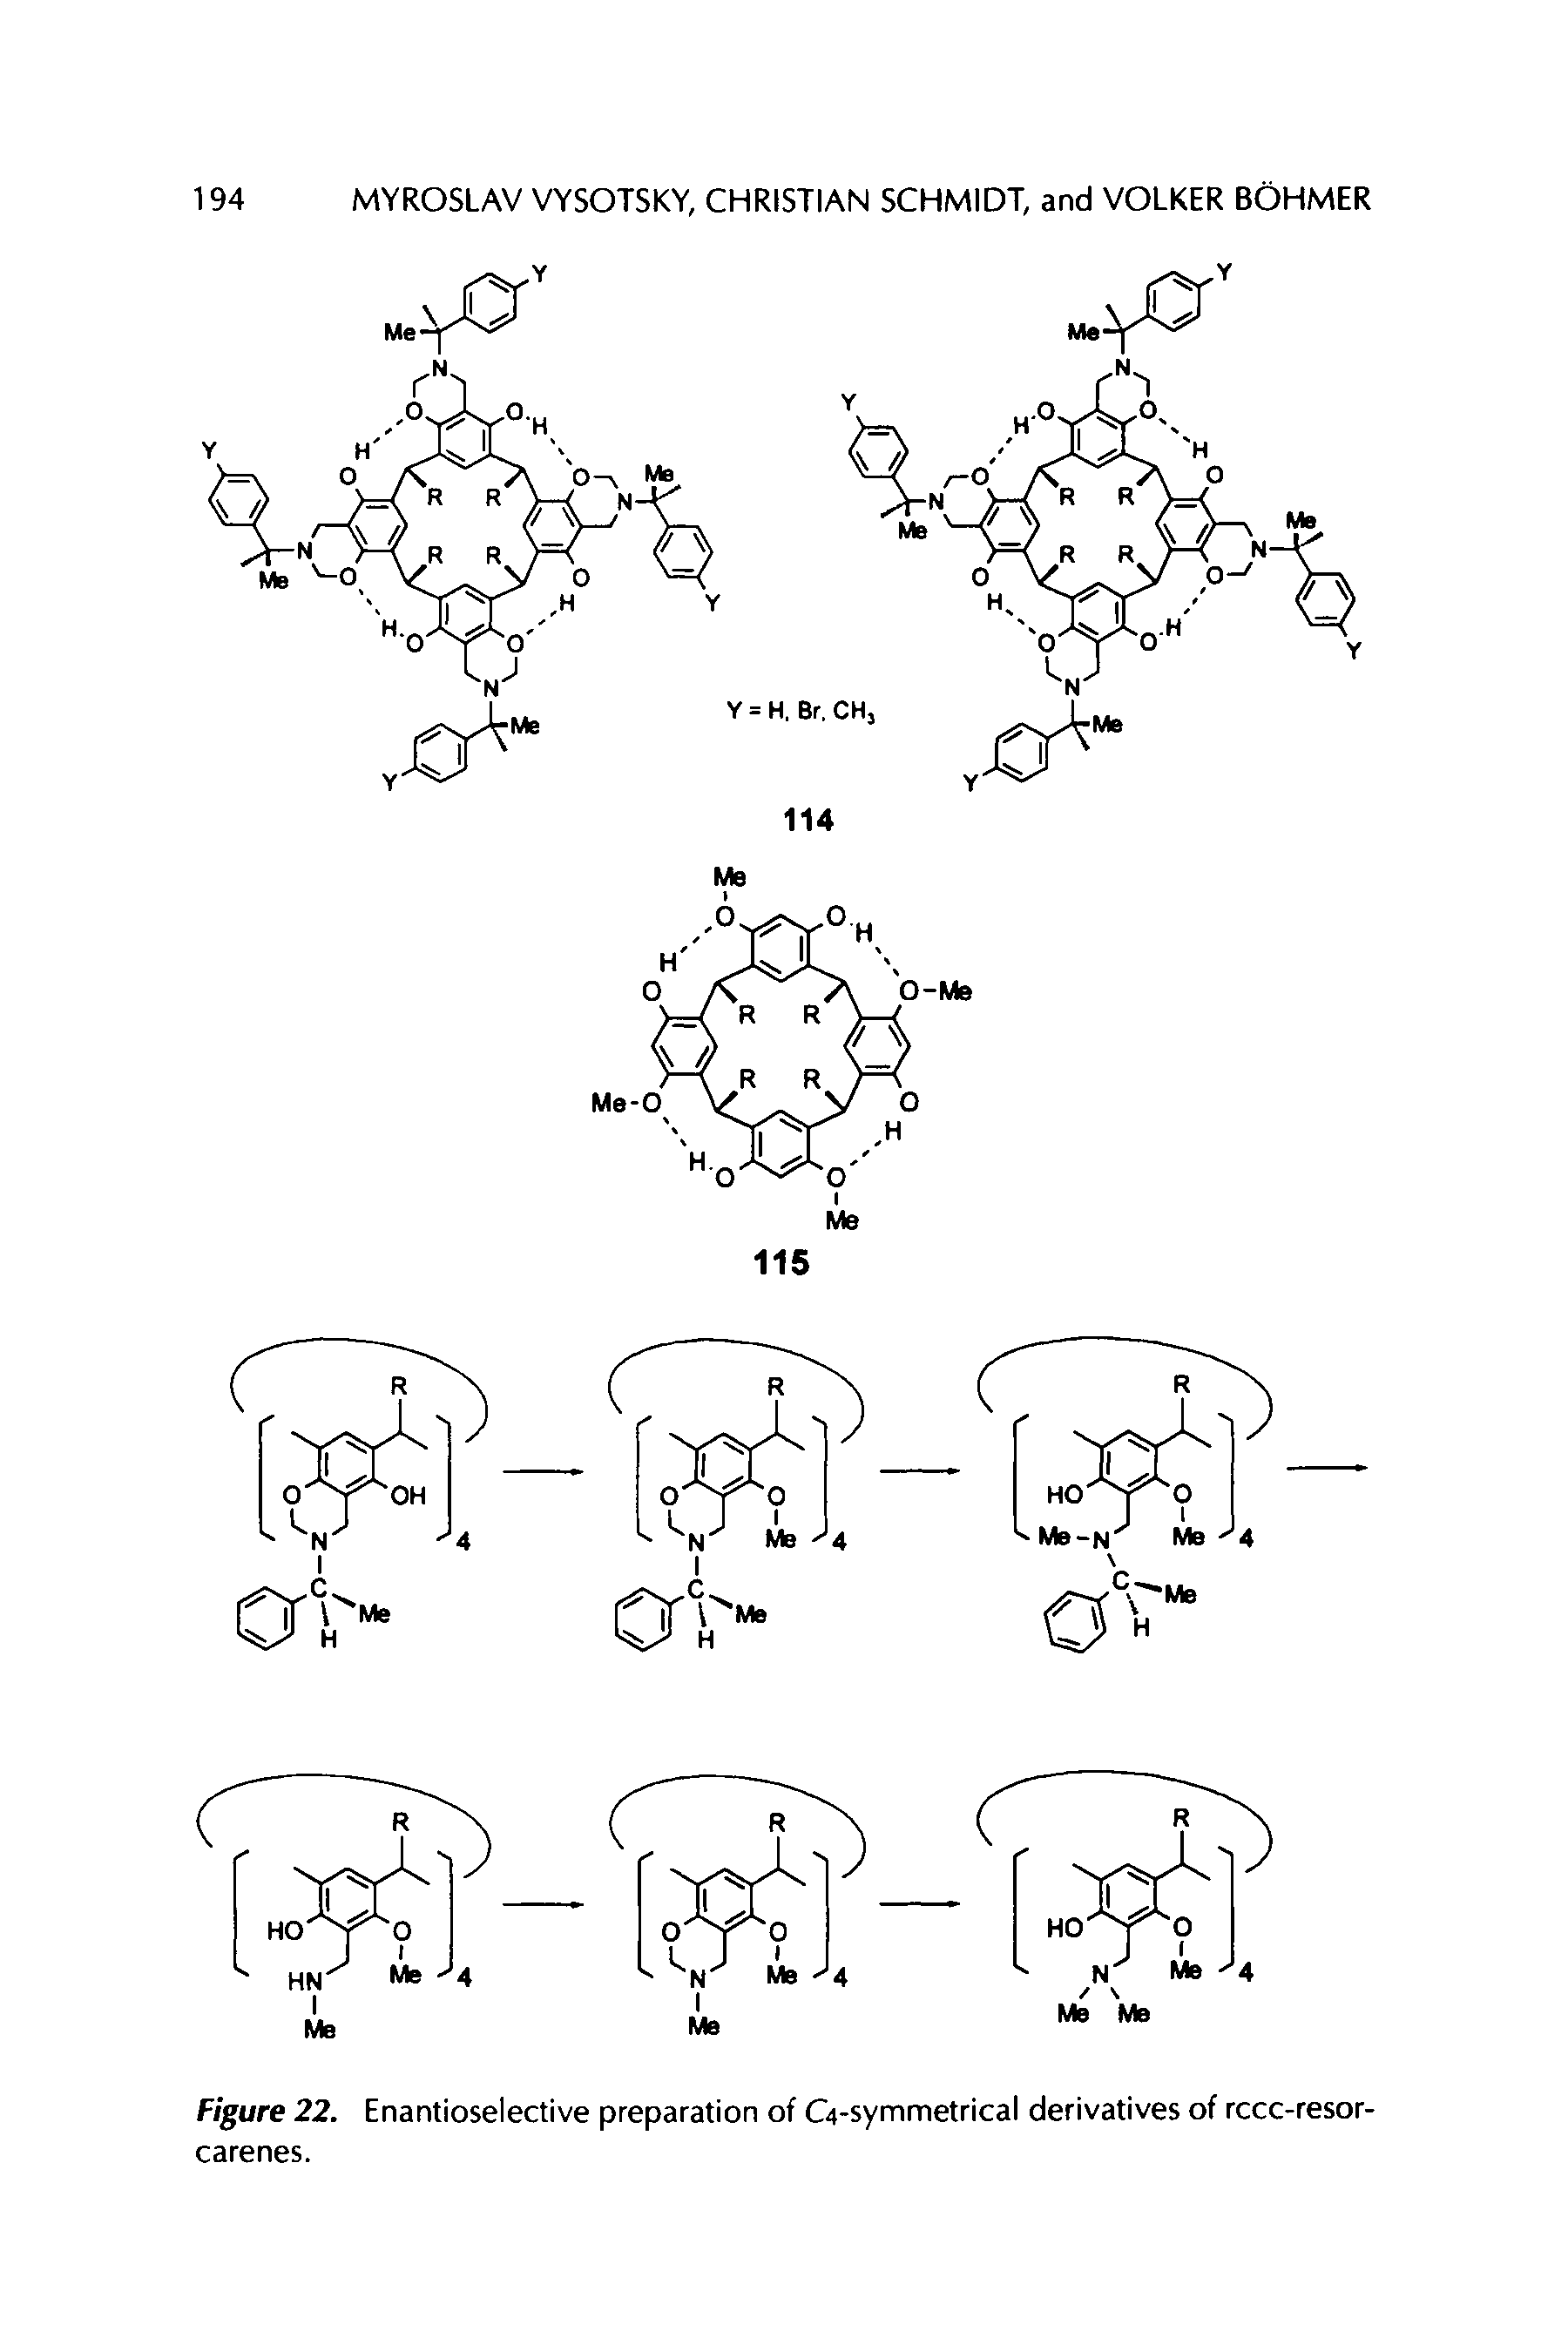 Figure 22. Enantioselective preparation of C4-symmetrical derivatives of rccc-resor-carenes.